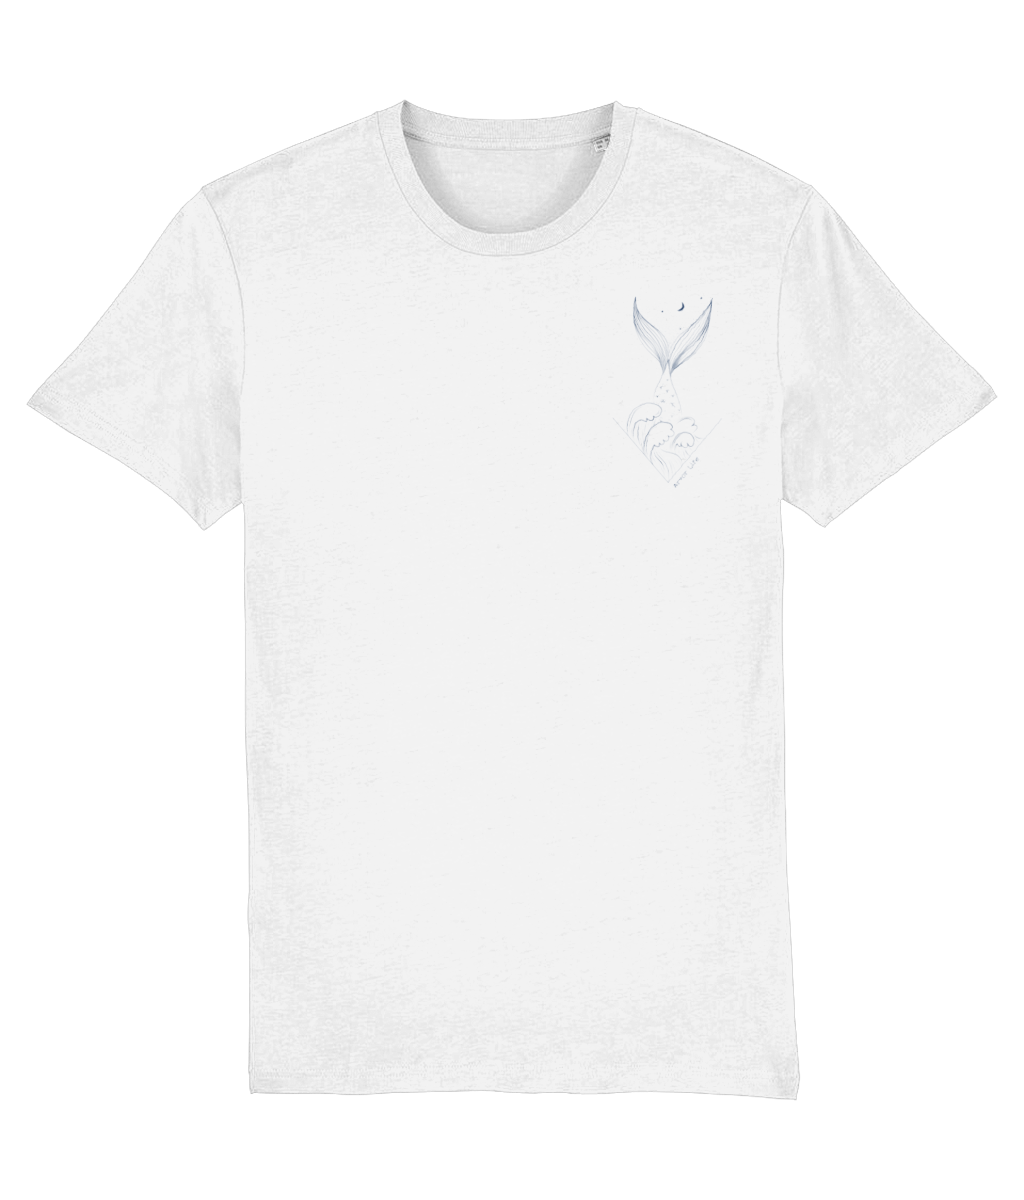 Merfolk Unisex Organic Cotton T-shirt